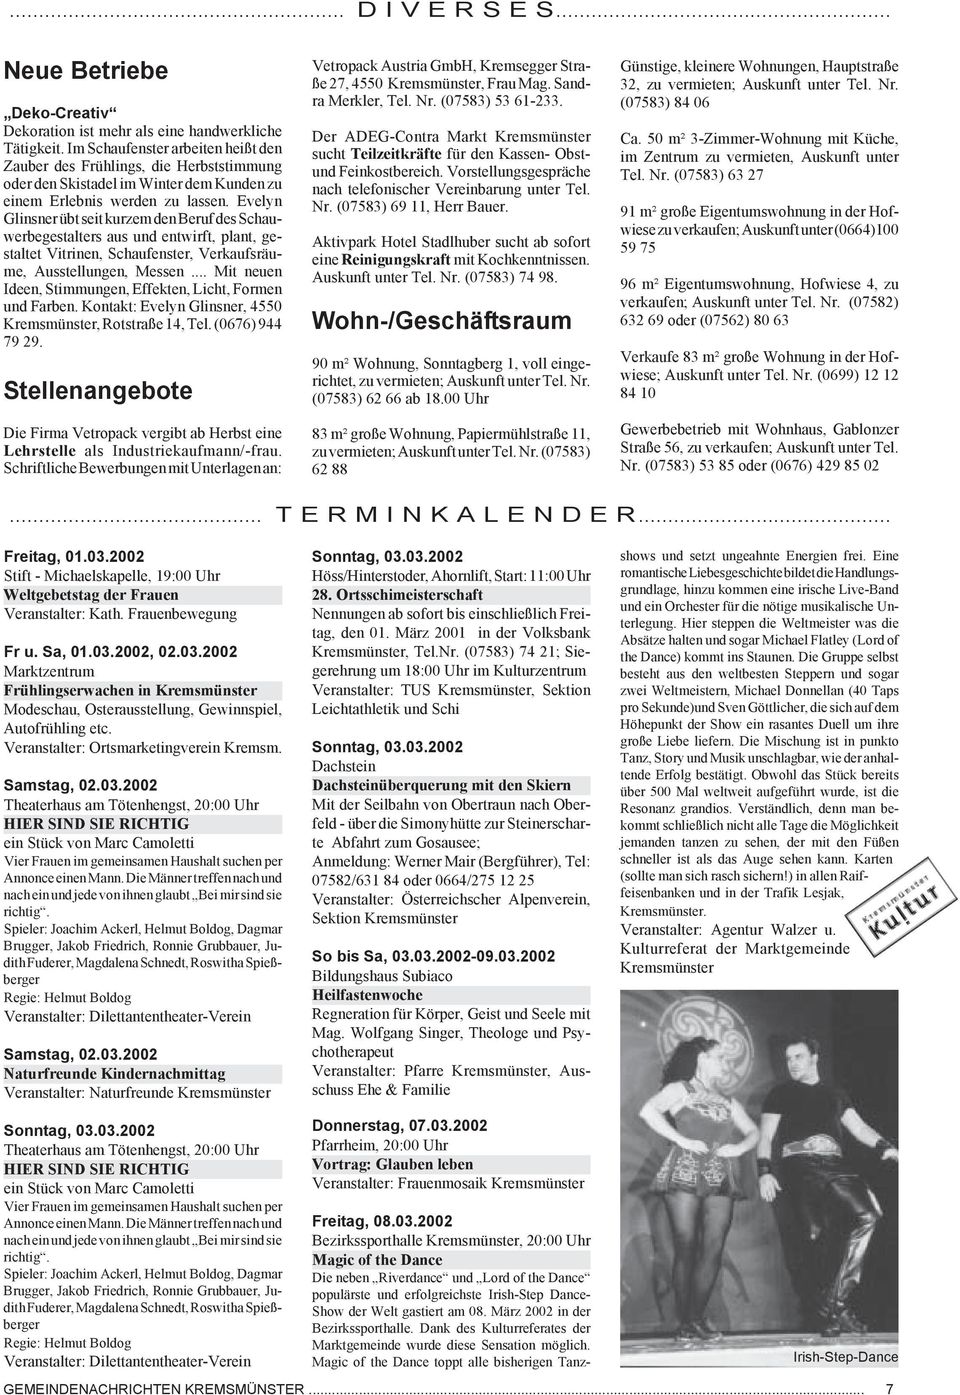 Sonntagberg single frau - Altach single event